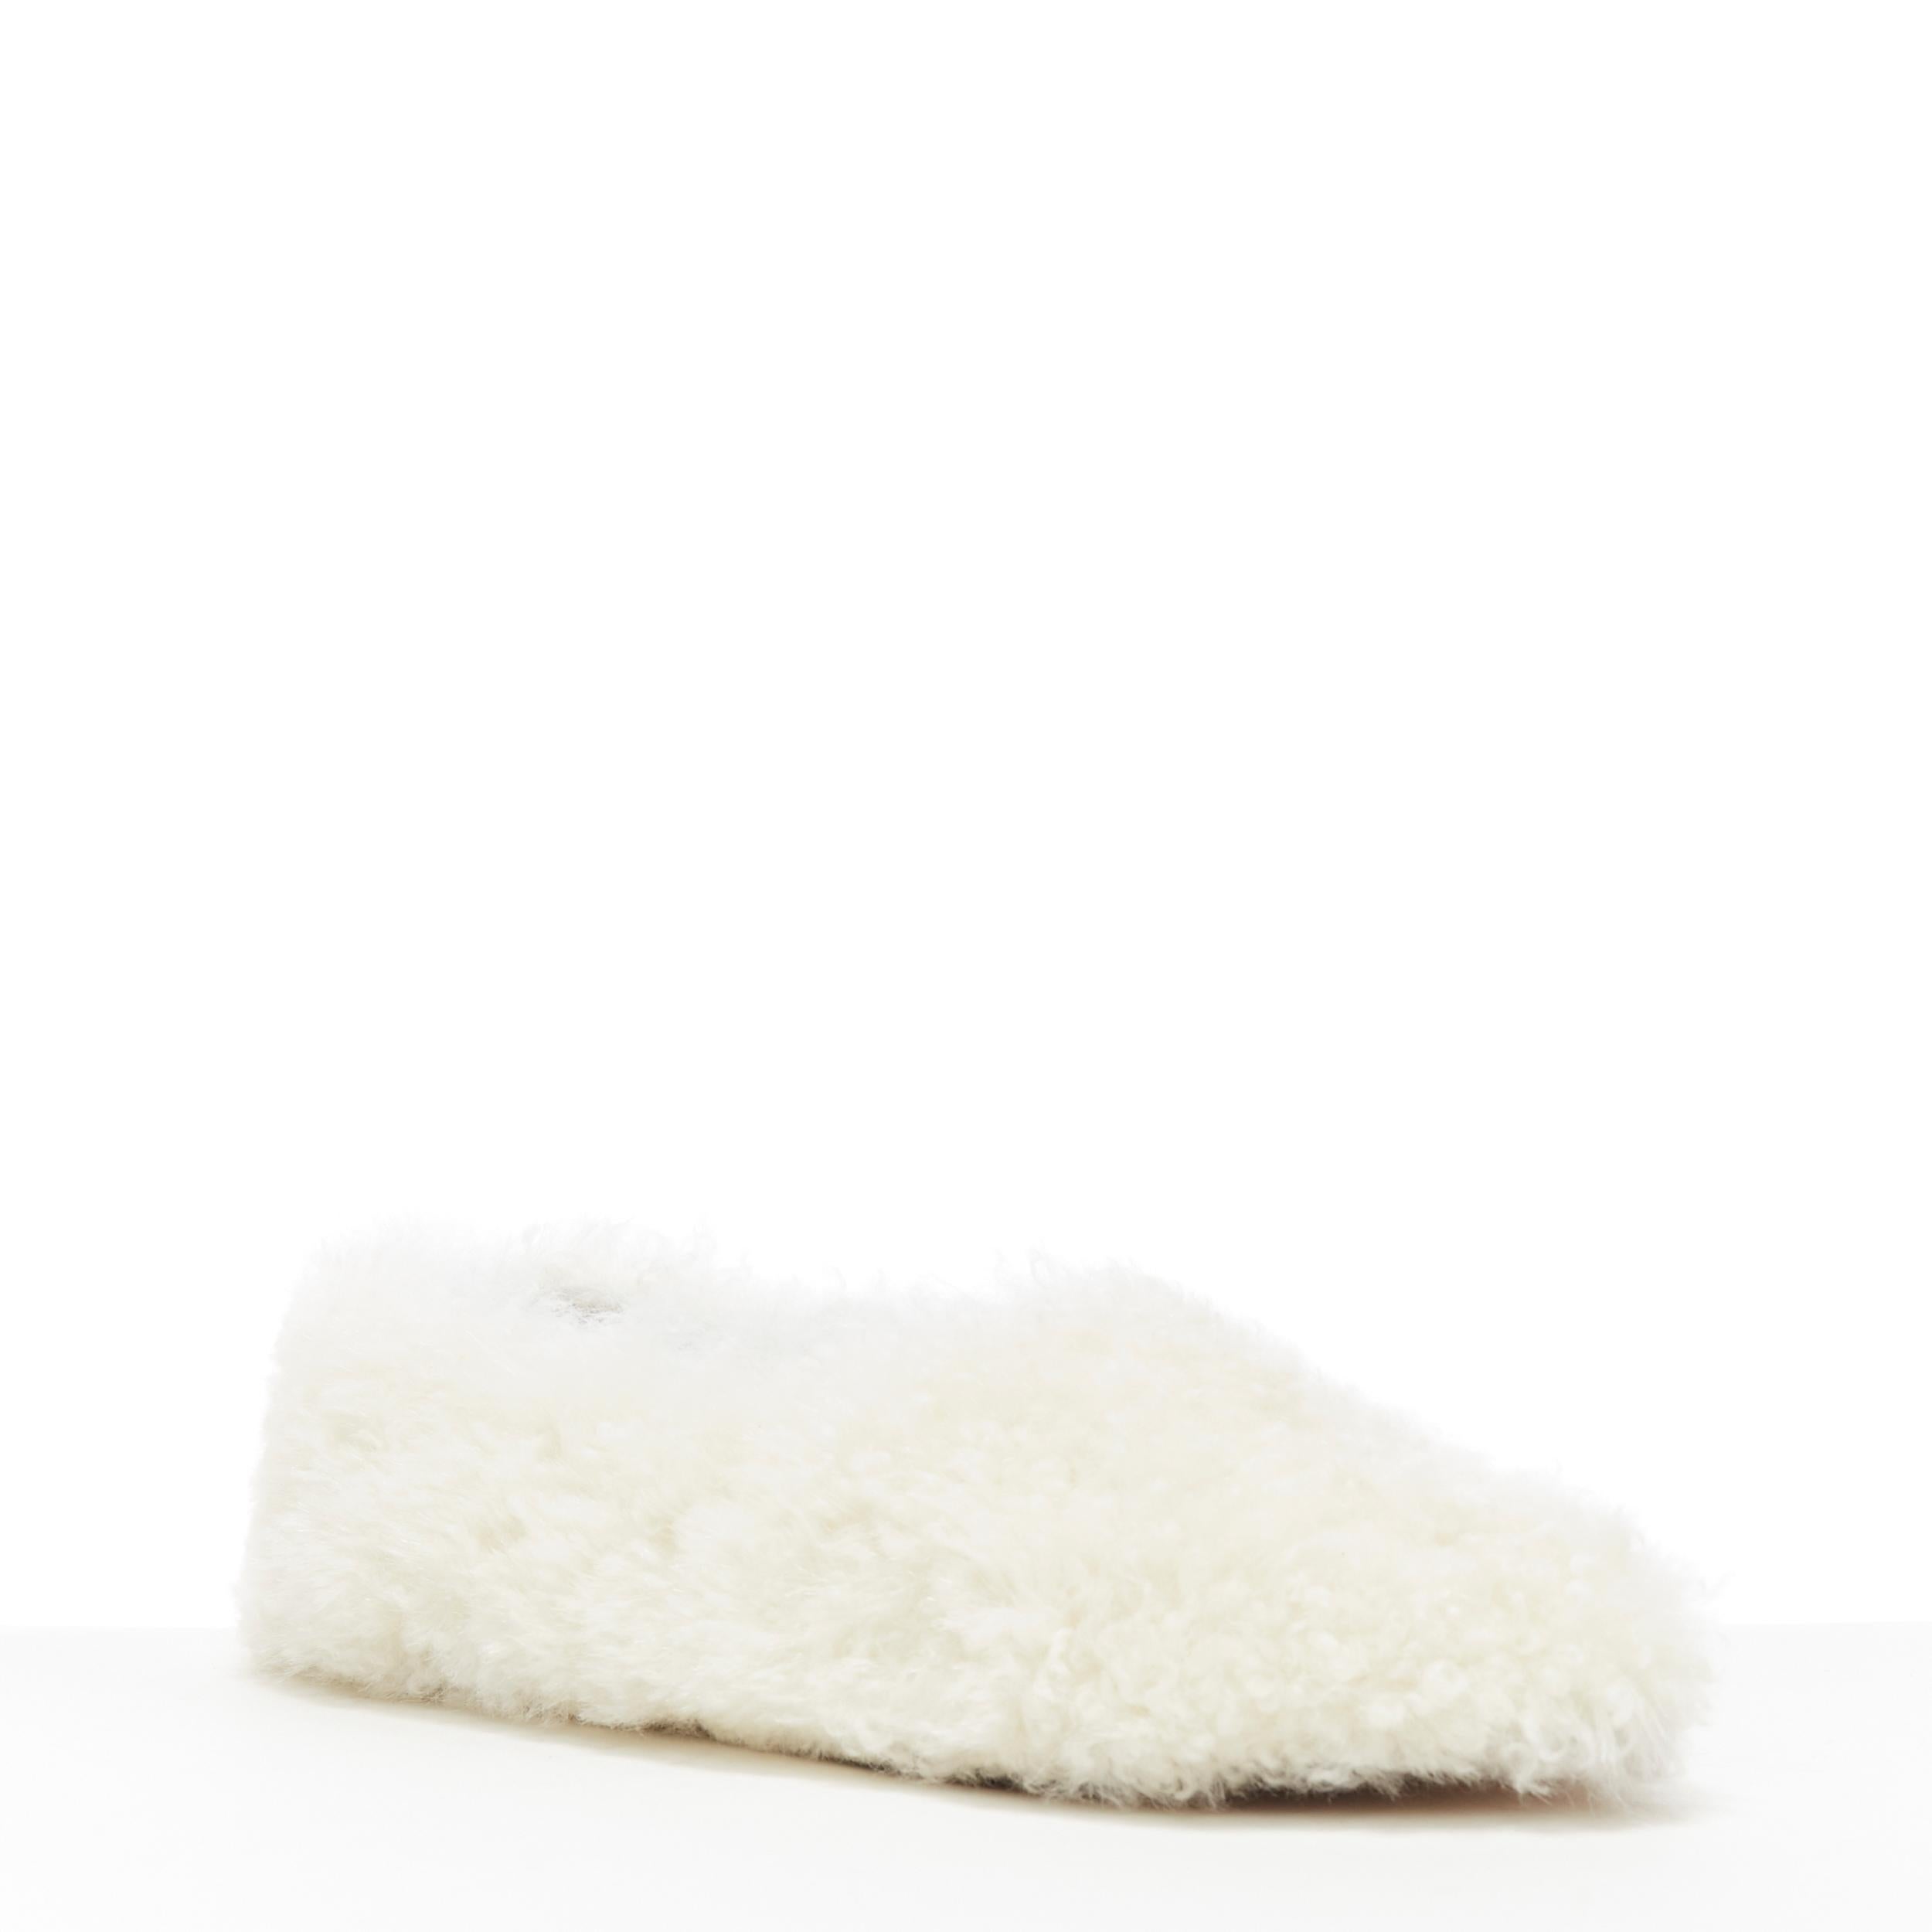 new OLD CELINE Cosy Slipper Goat Fur shearling round toe flat slipper shoes EU40
Brand: Celine
Designer: Phoebe Philo
Model Name / Style: Cosy Slipper
Material: Fur
Color: Beige
Pattern: Solid
Closure: Slip on
Extra Detail: Flat (Under 1 in) heel